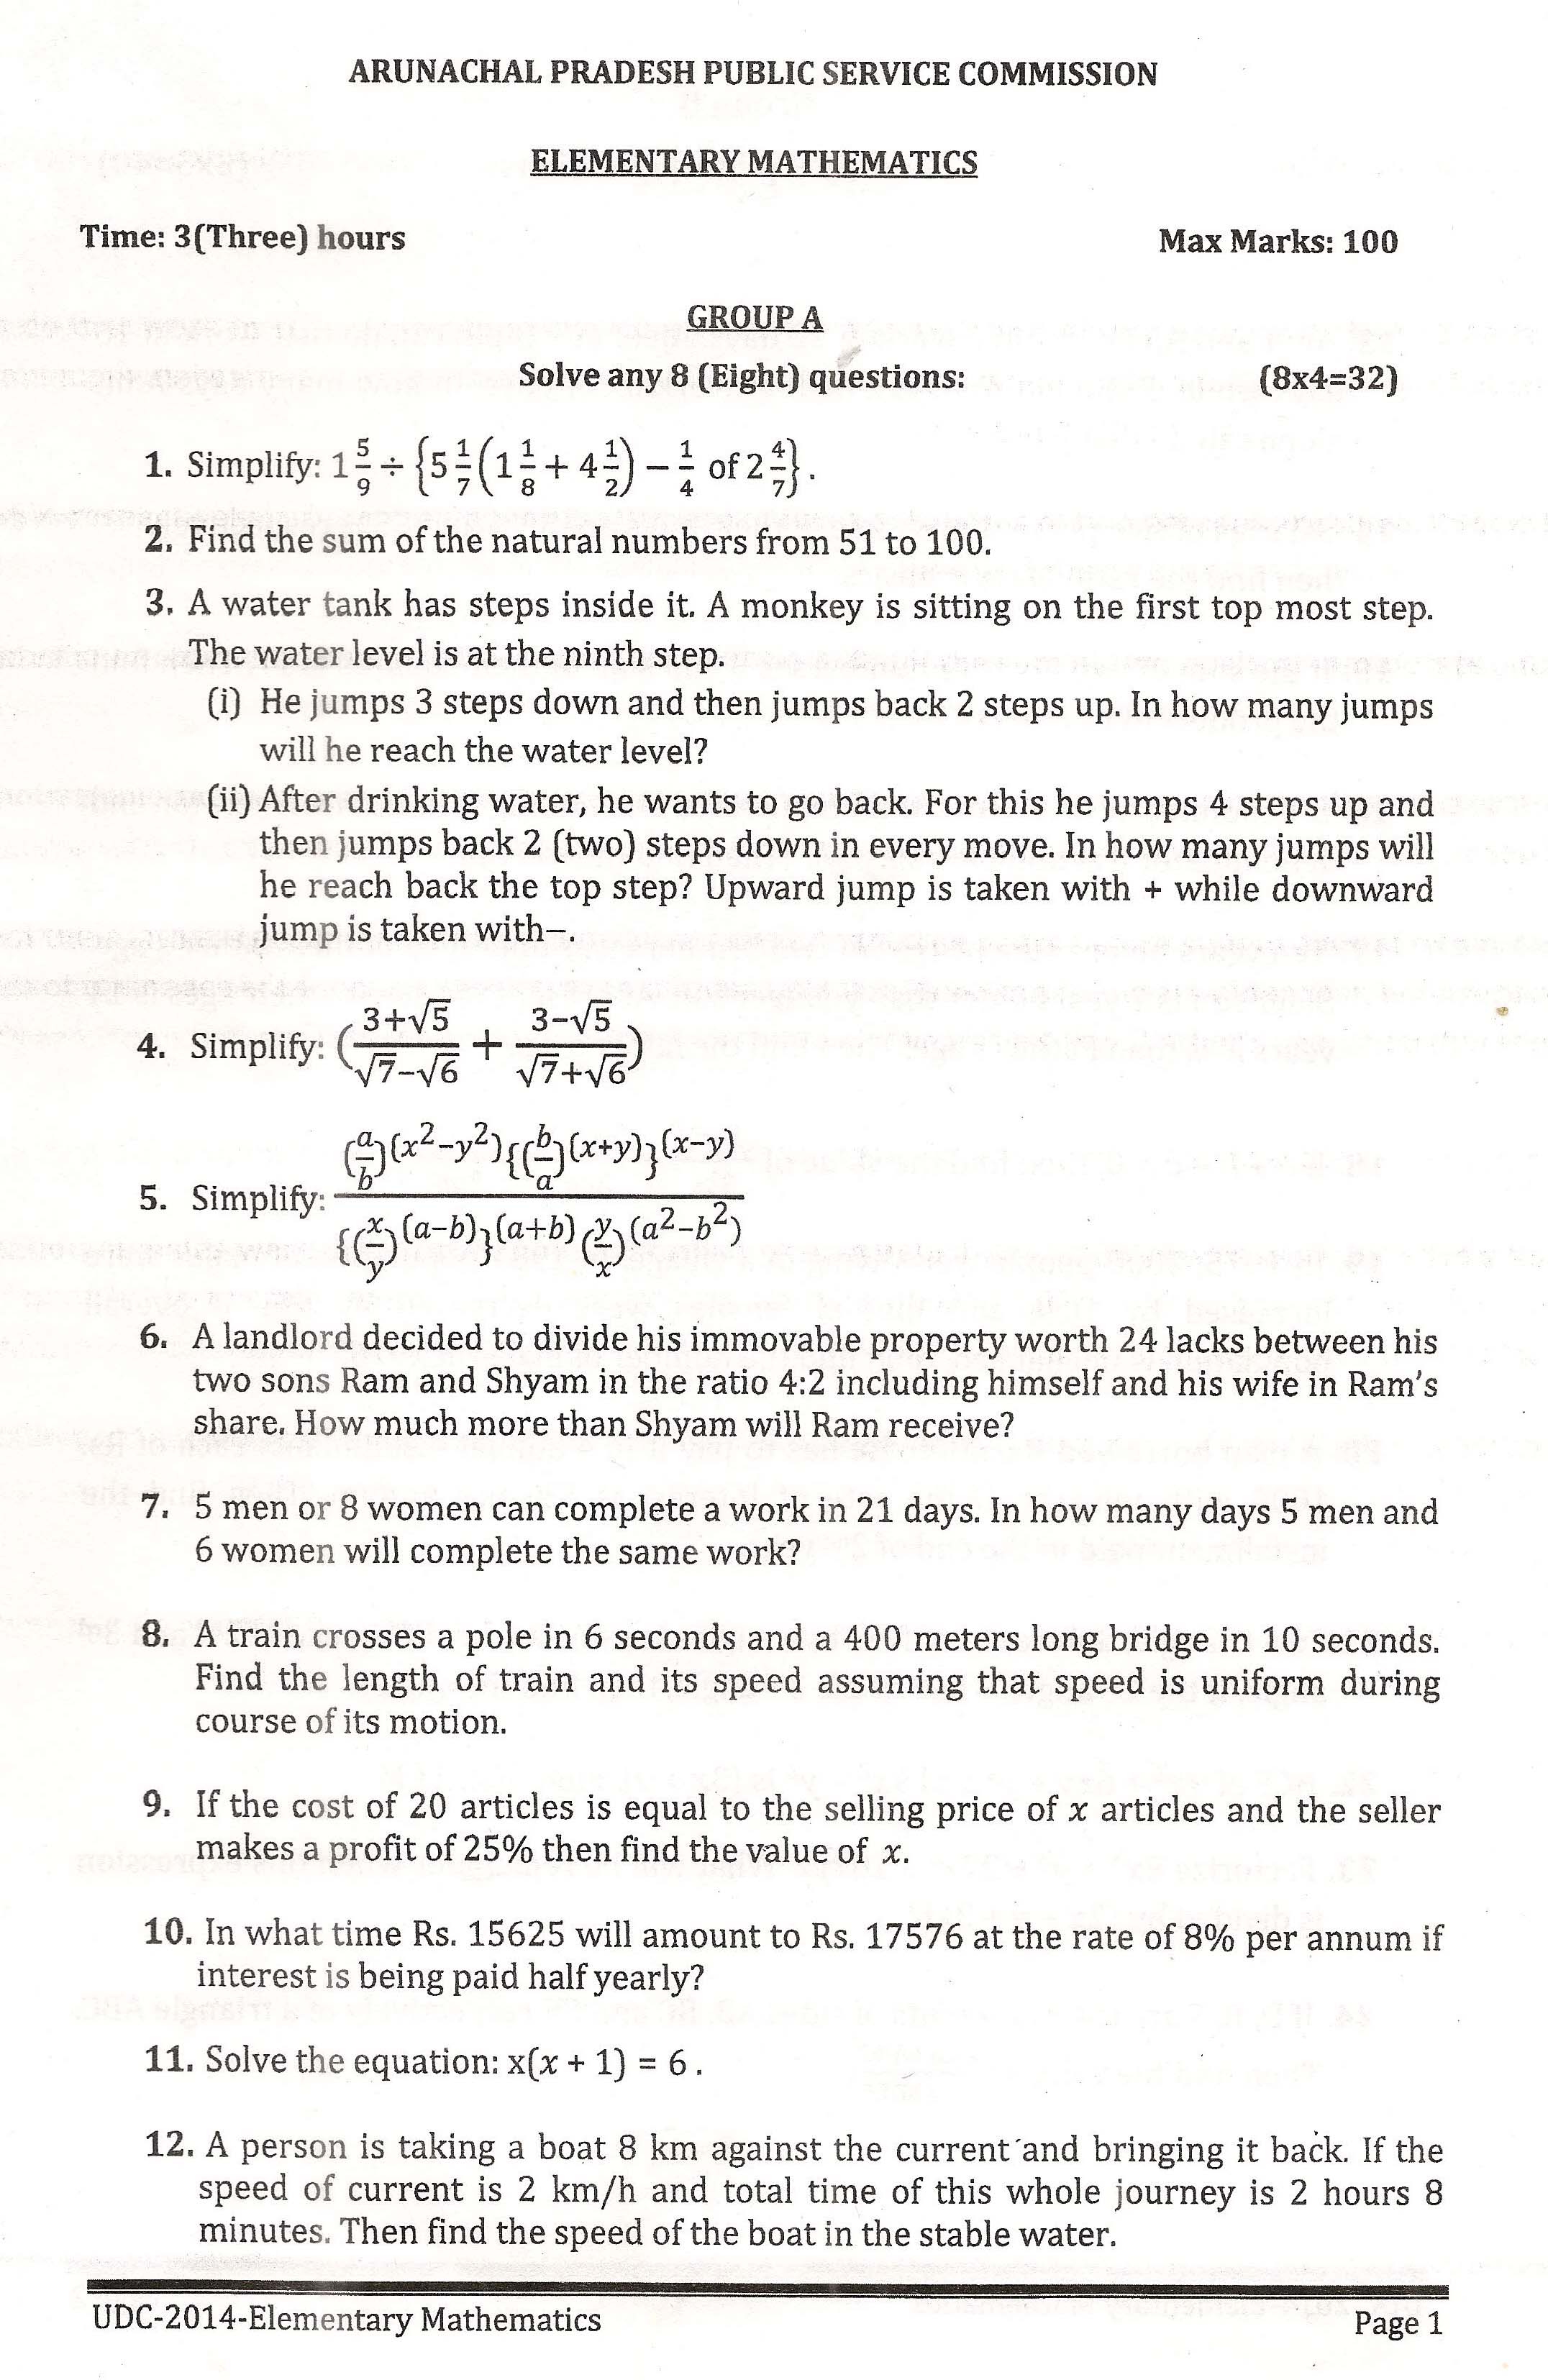 APPSC Upper Division Clerk Mathematics Exam Question Paper 2014 1